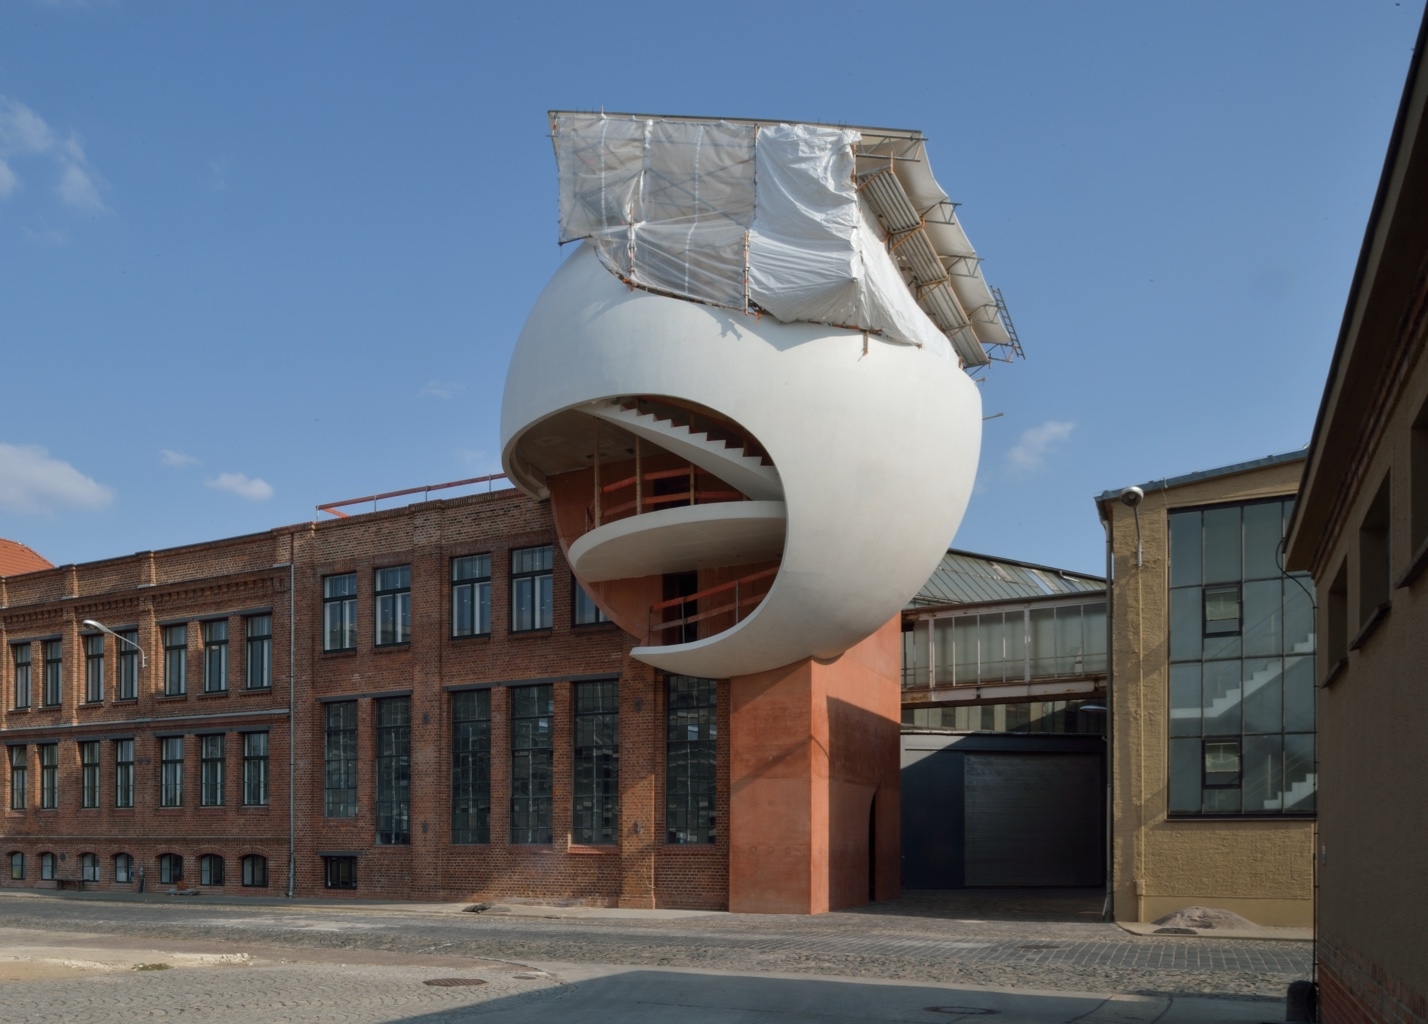 Niemeyer Sphere, Techne Sphere Leipzig, Oscar Niemeyer 2020.